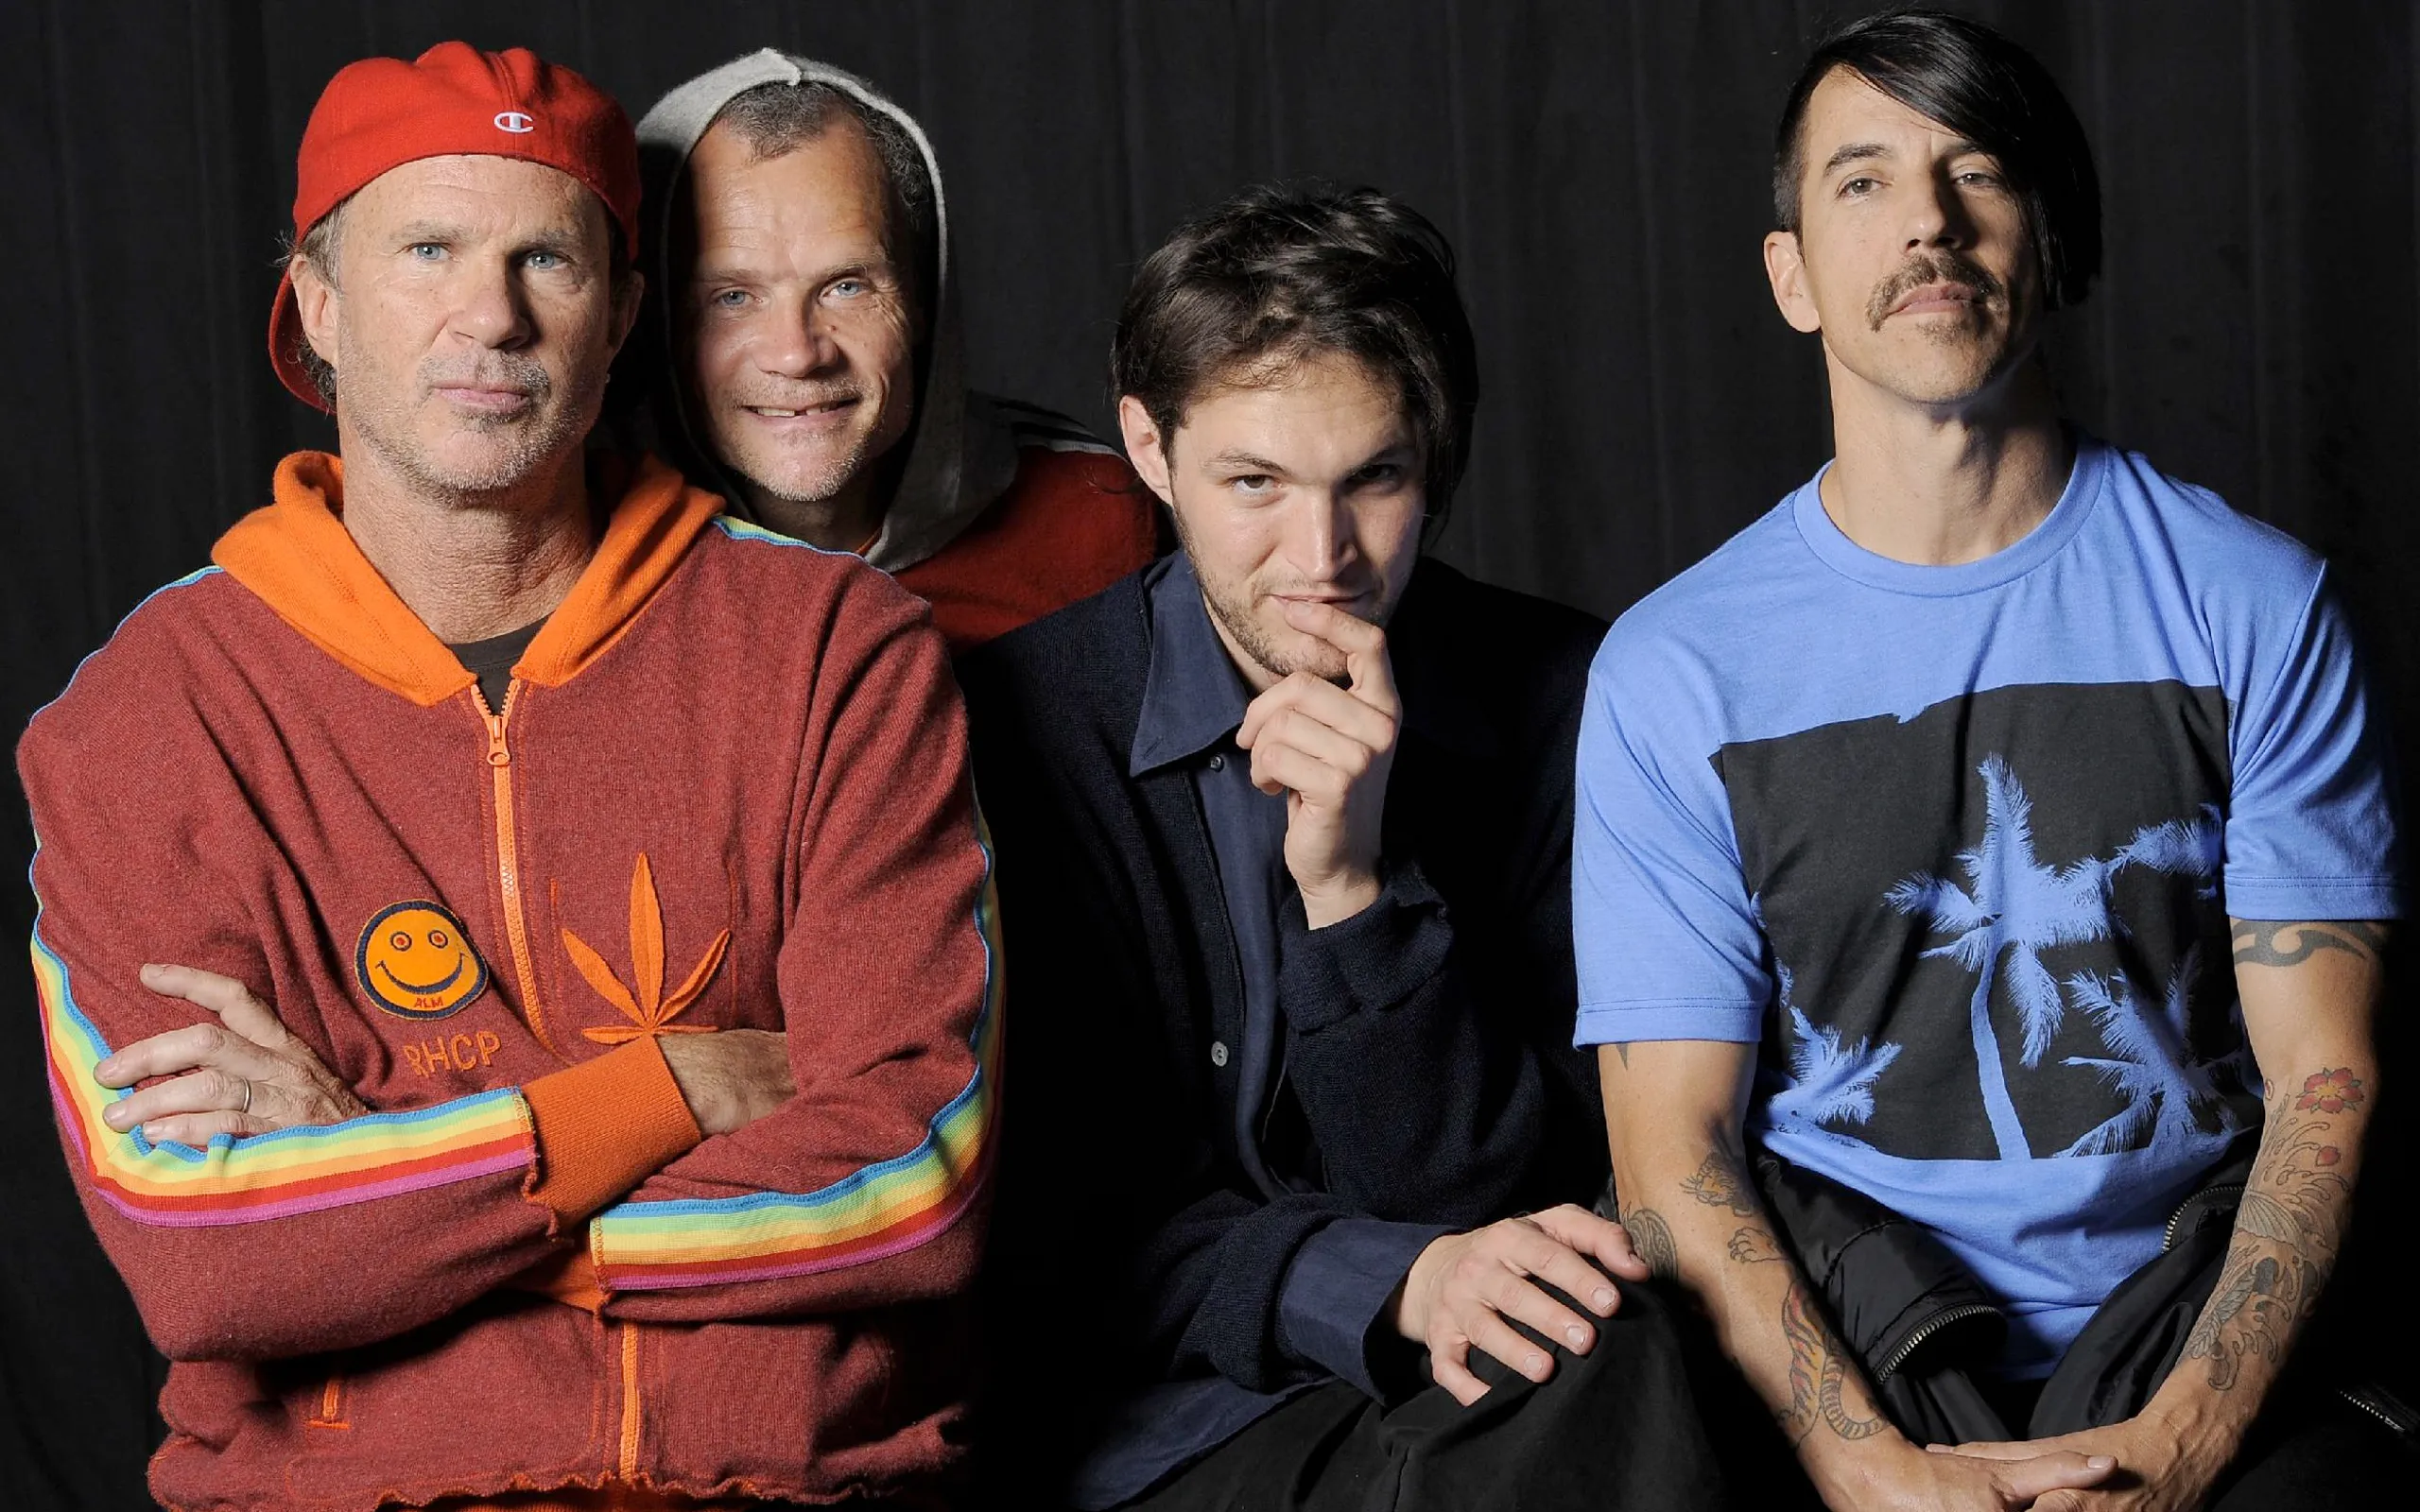 Red pepper клипы. Группа ред хот Чили пеперс. Группа Red hot Chili Peppers 2022. Ред хот Чили пеперс 2000. Барабанщик ред хот Чили пеперс.